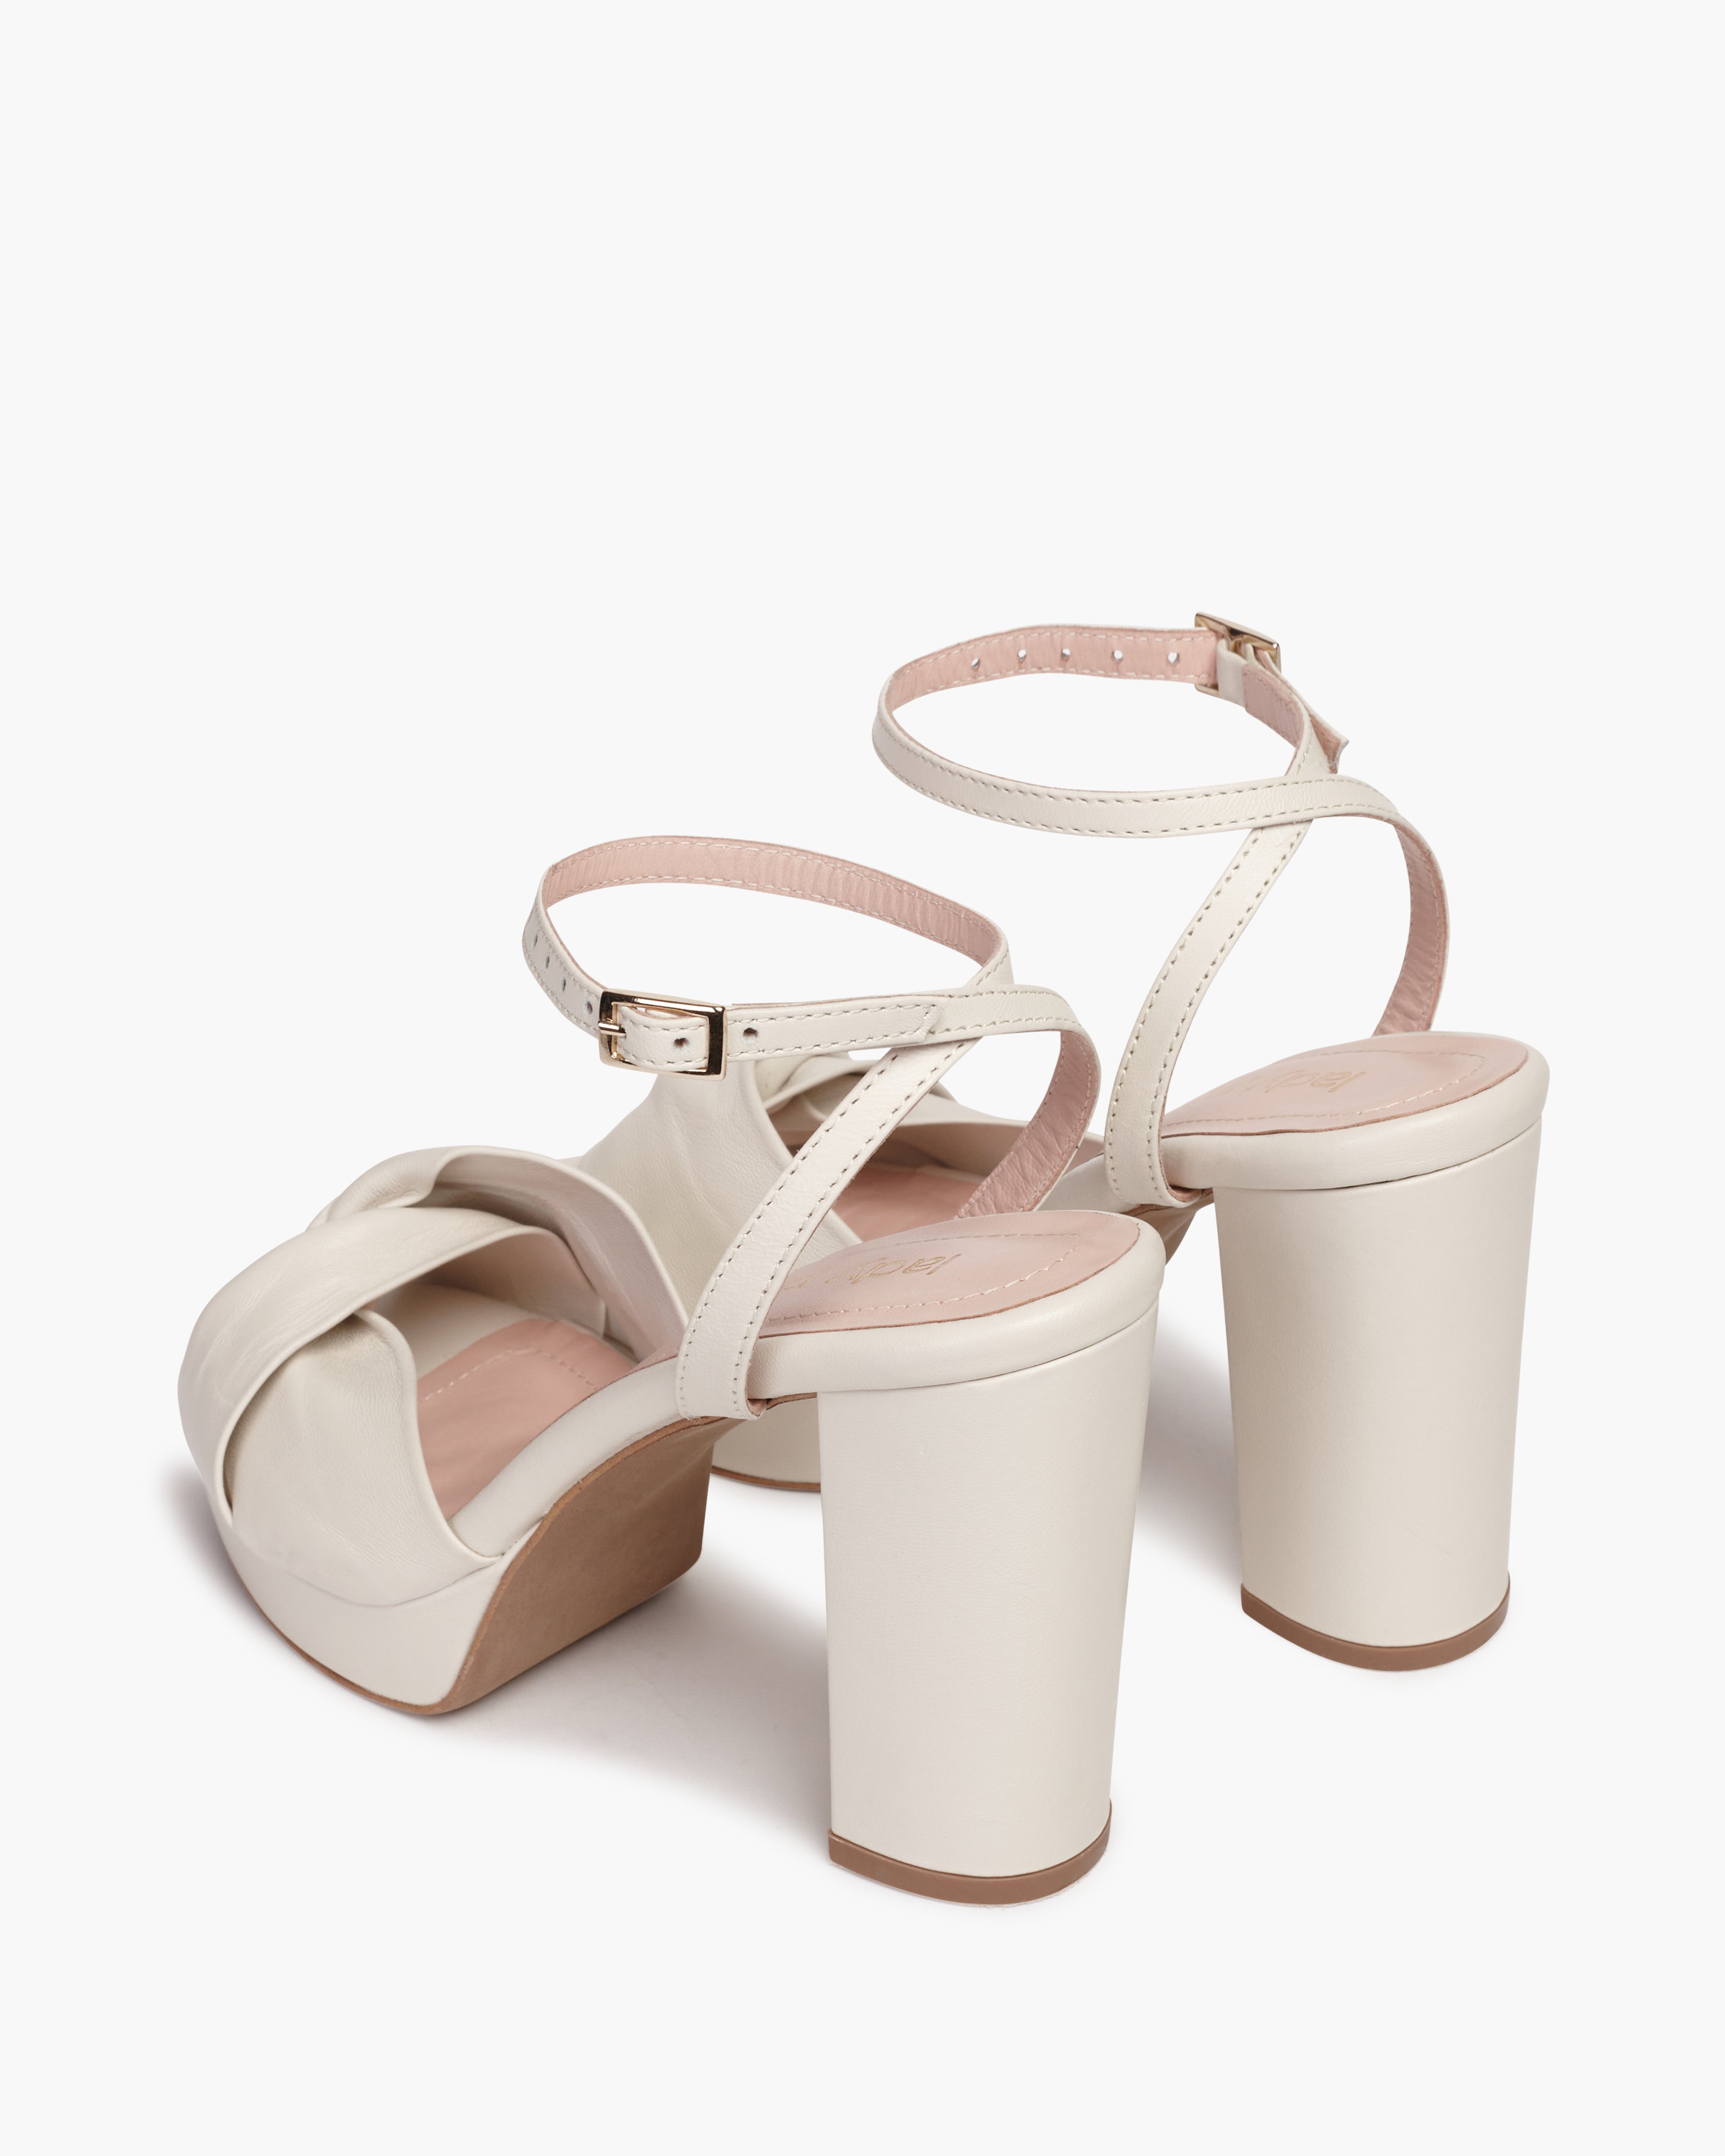 Georgia White Sandals